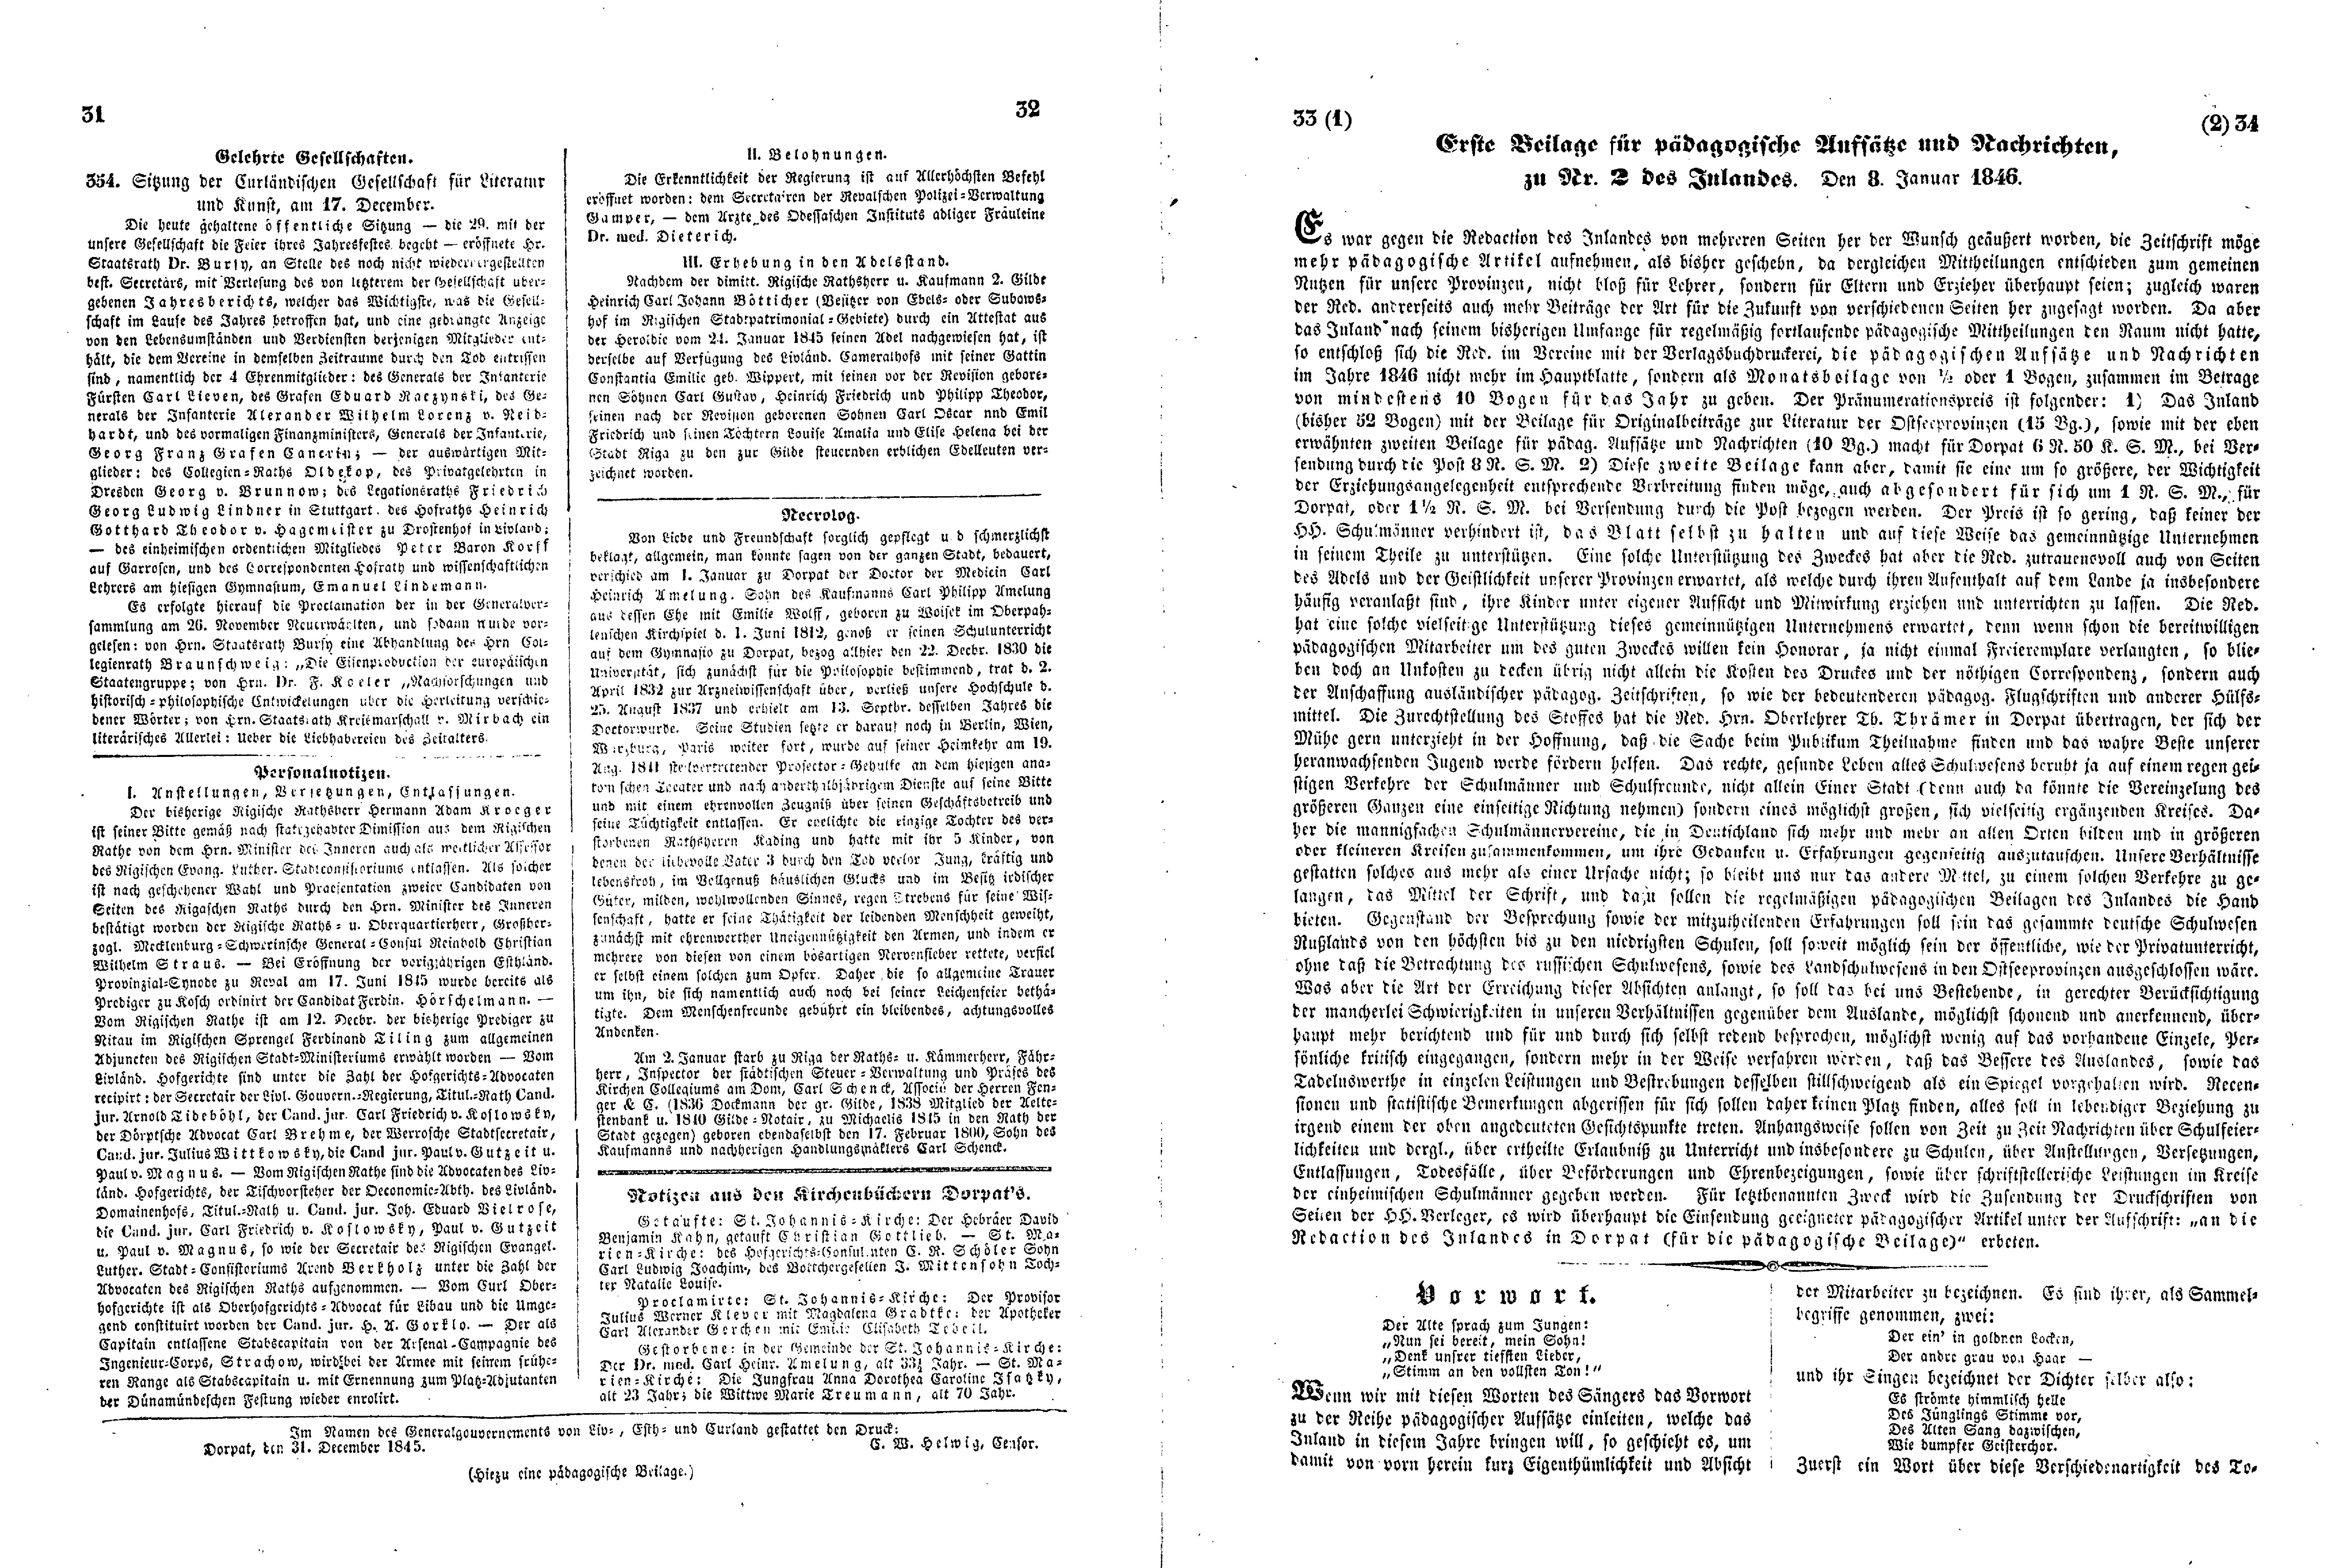 Das Inland [11] (1846) | 13. (31-34) Main body of text